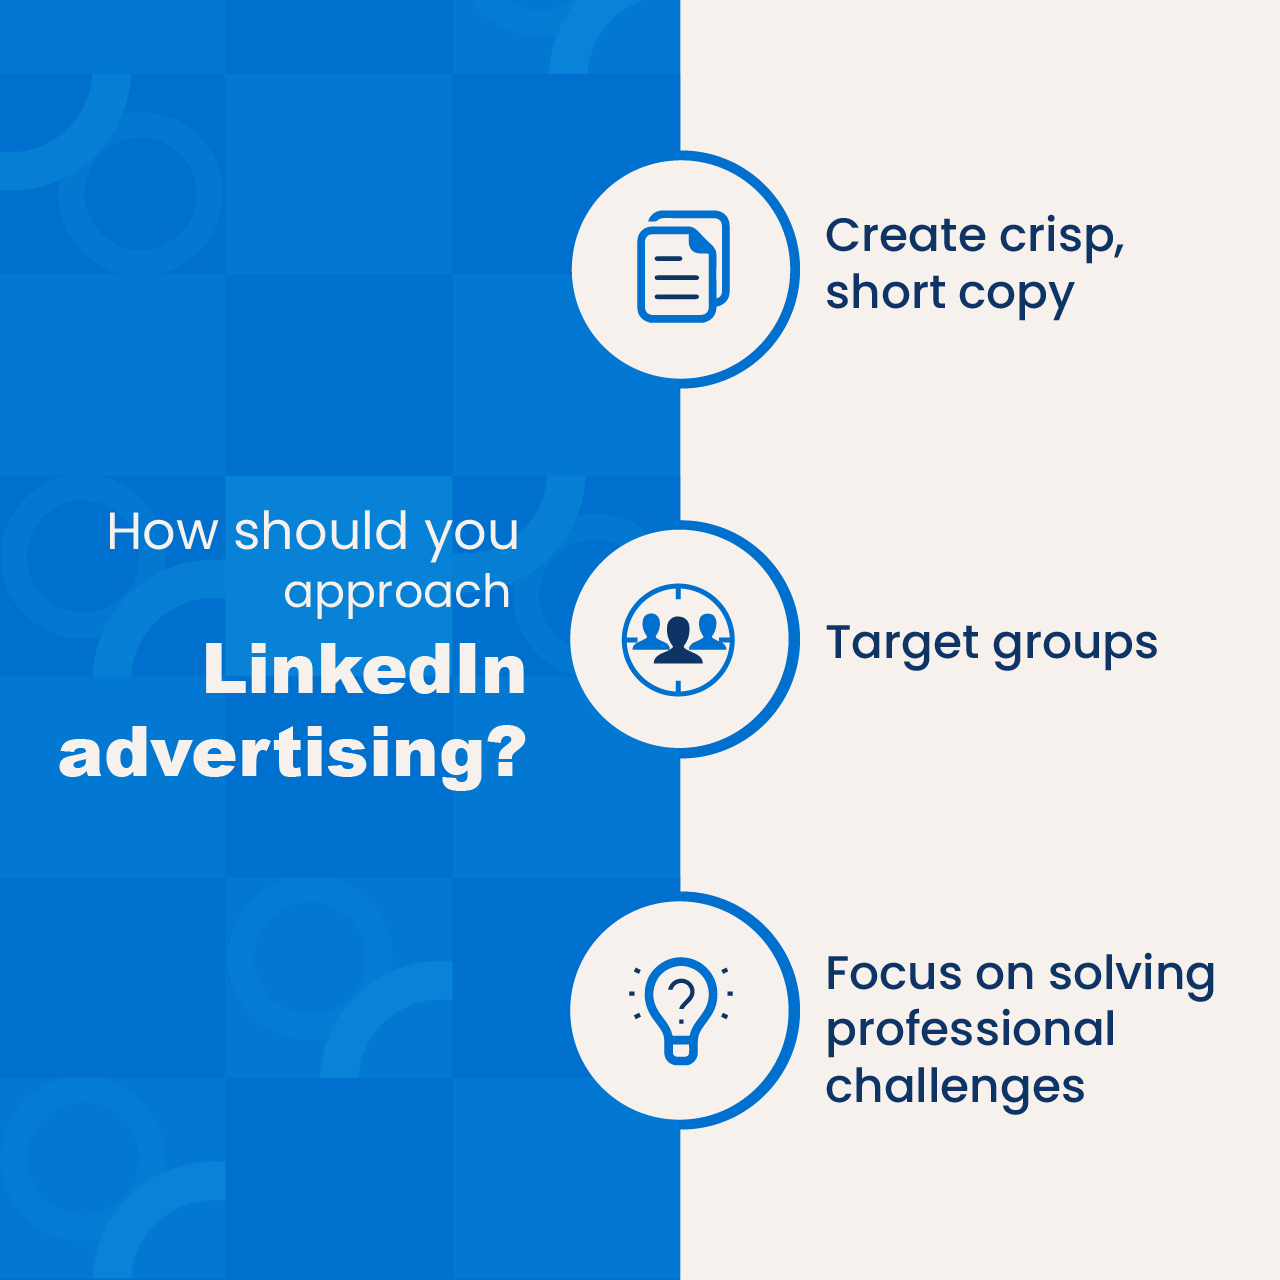 LinkedIn advertising best practices